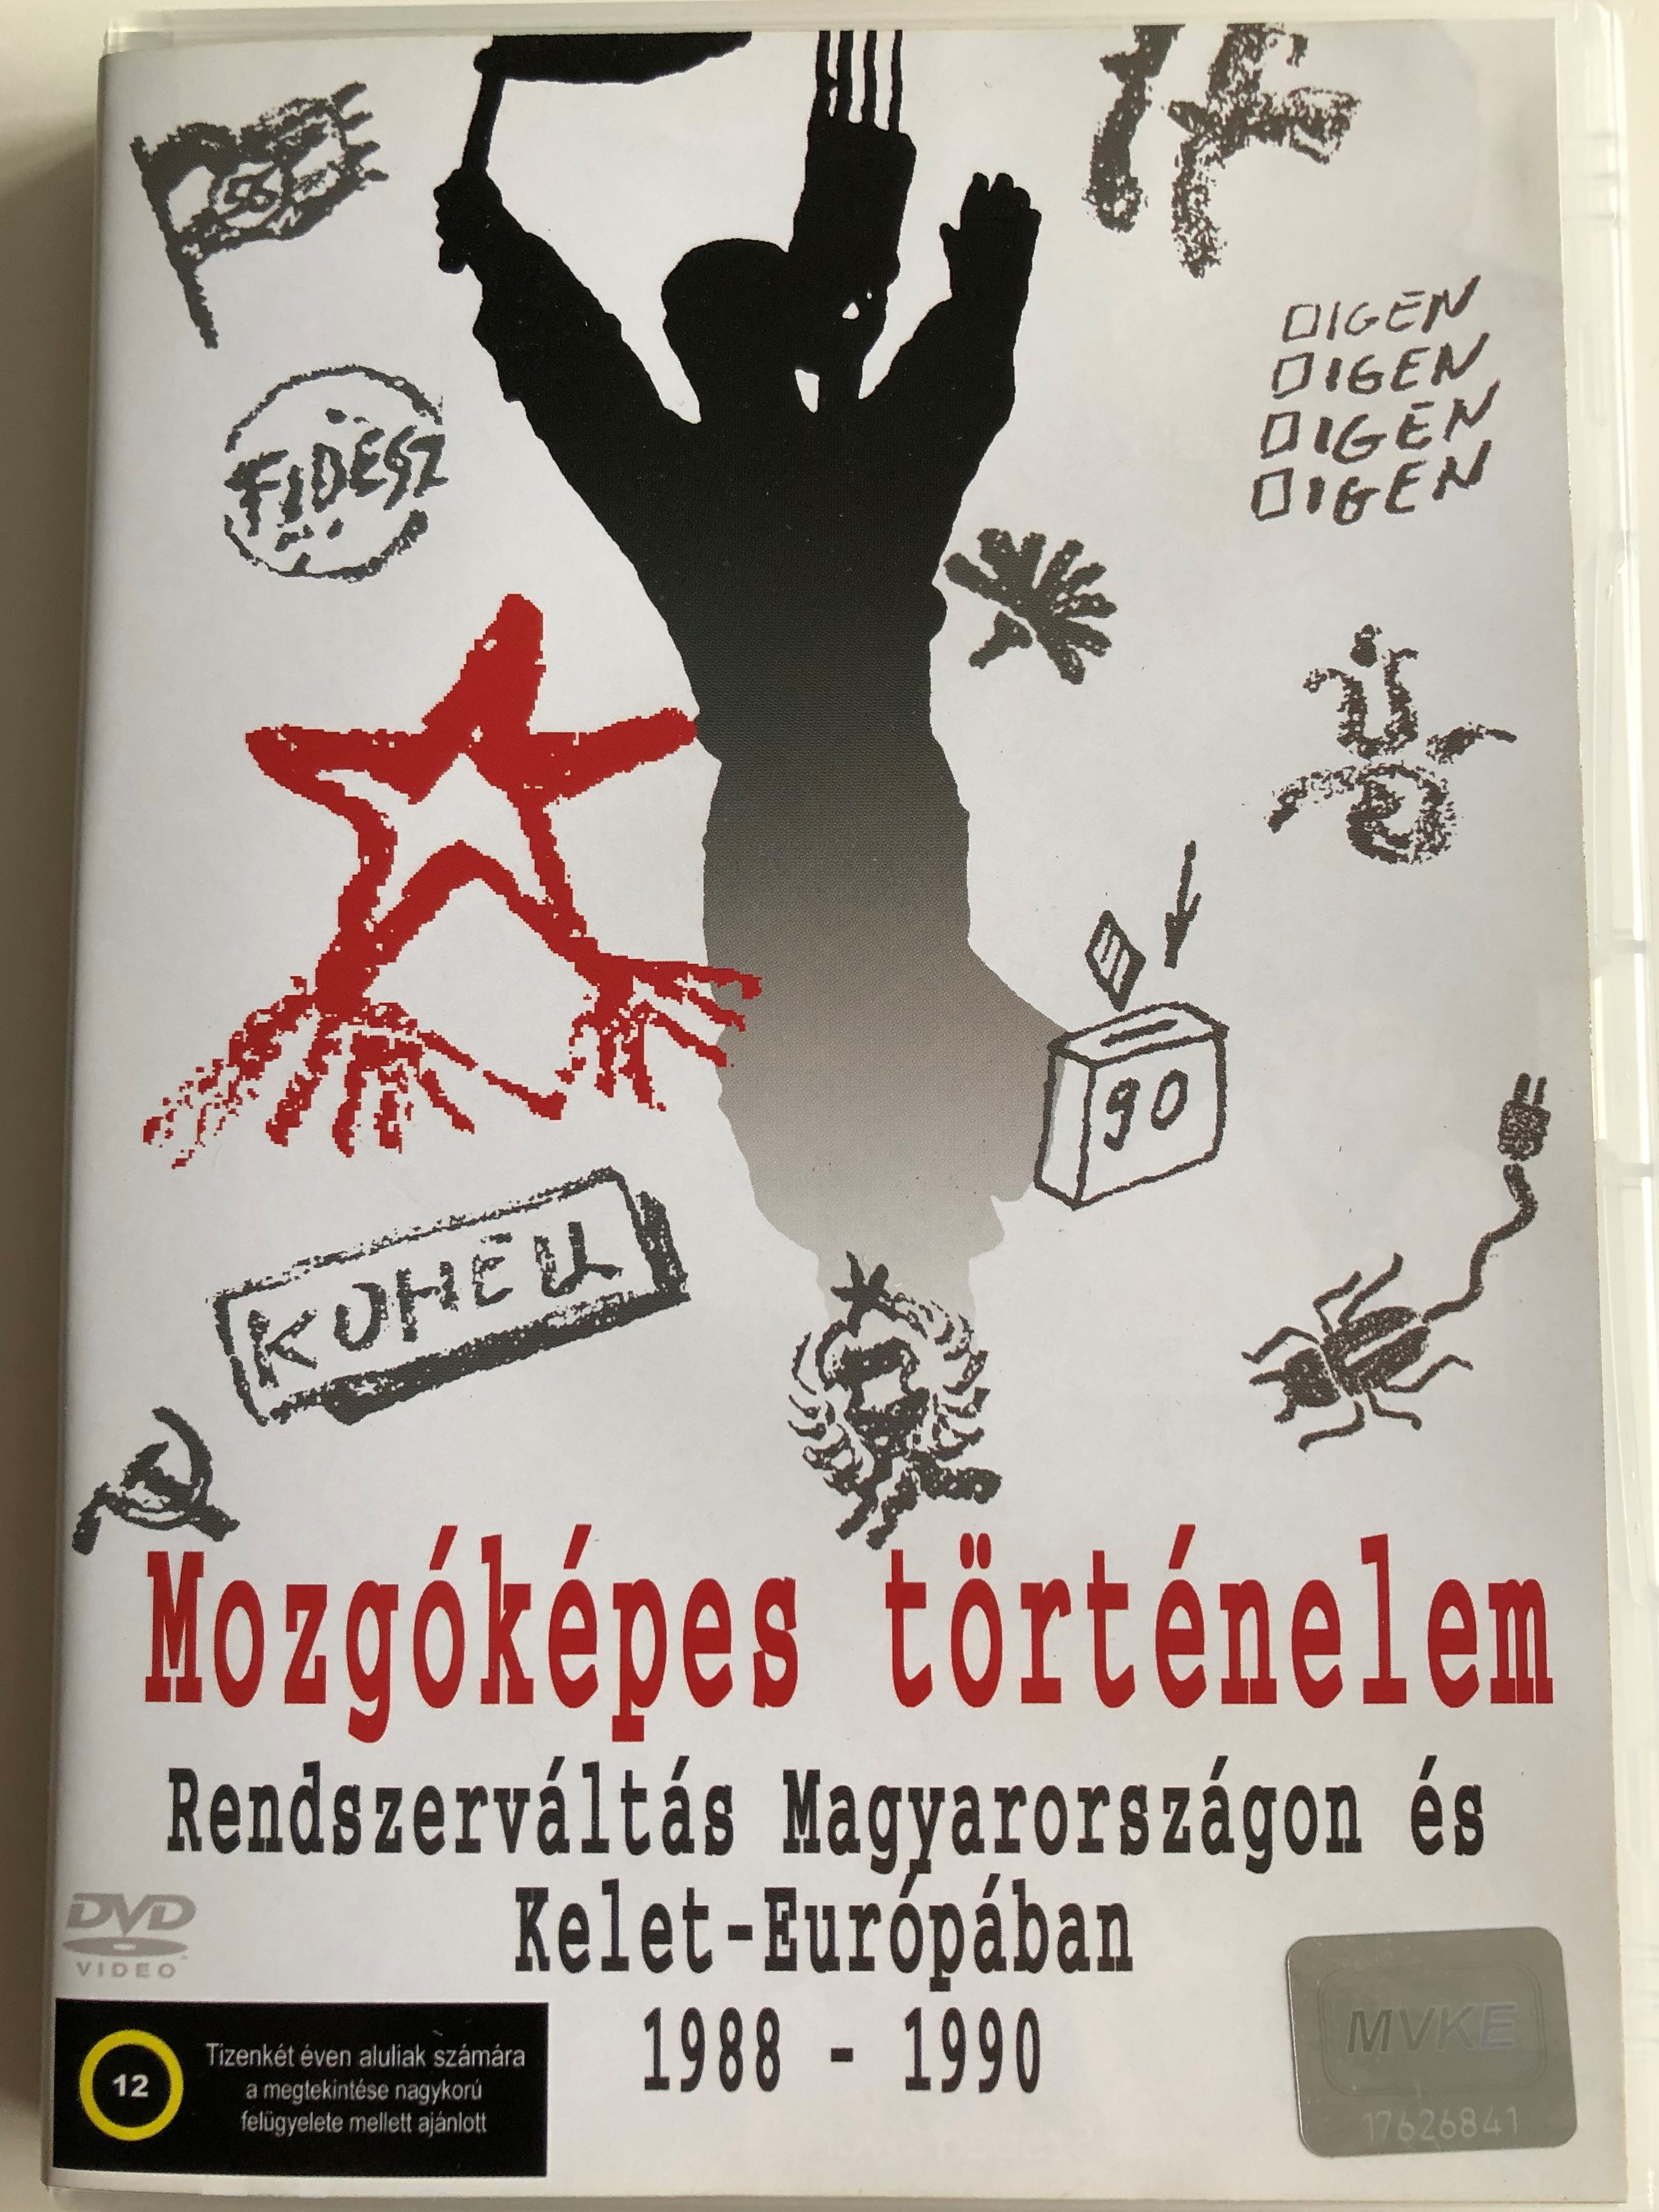 mozg-k-pes-t-rt-nelem-dvd-2006-redszerv-lt-s-magyarorsz-gon-s-kelet-eur-p-ban-1988-1990-directed-by-elbert-m-rta-1-.jpg